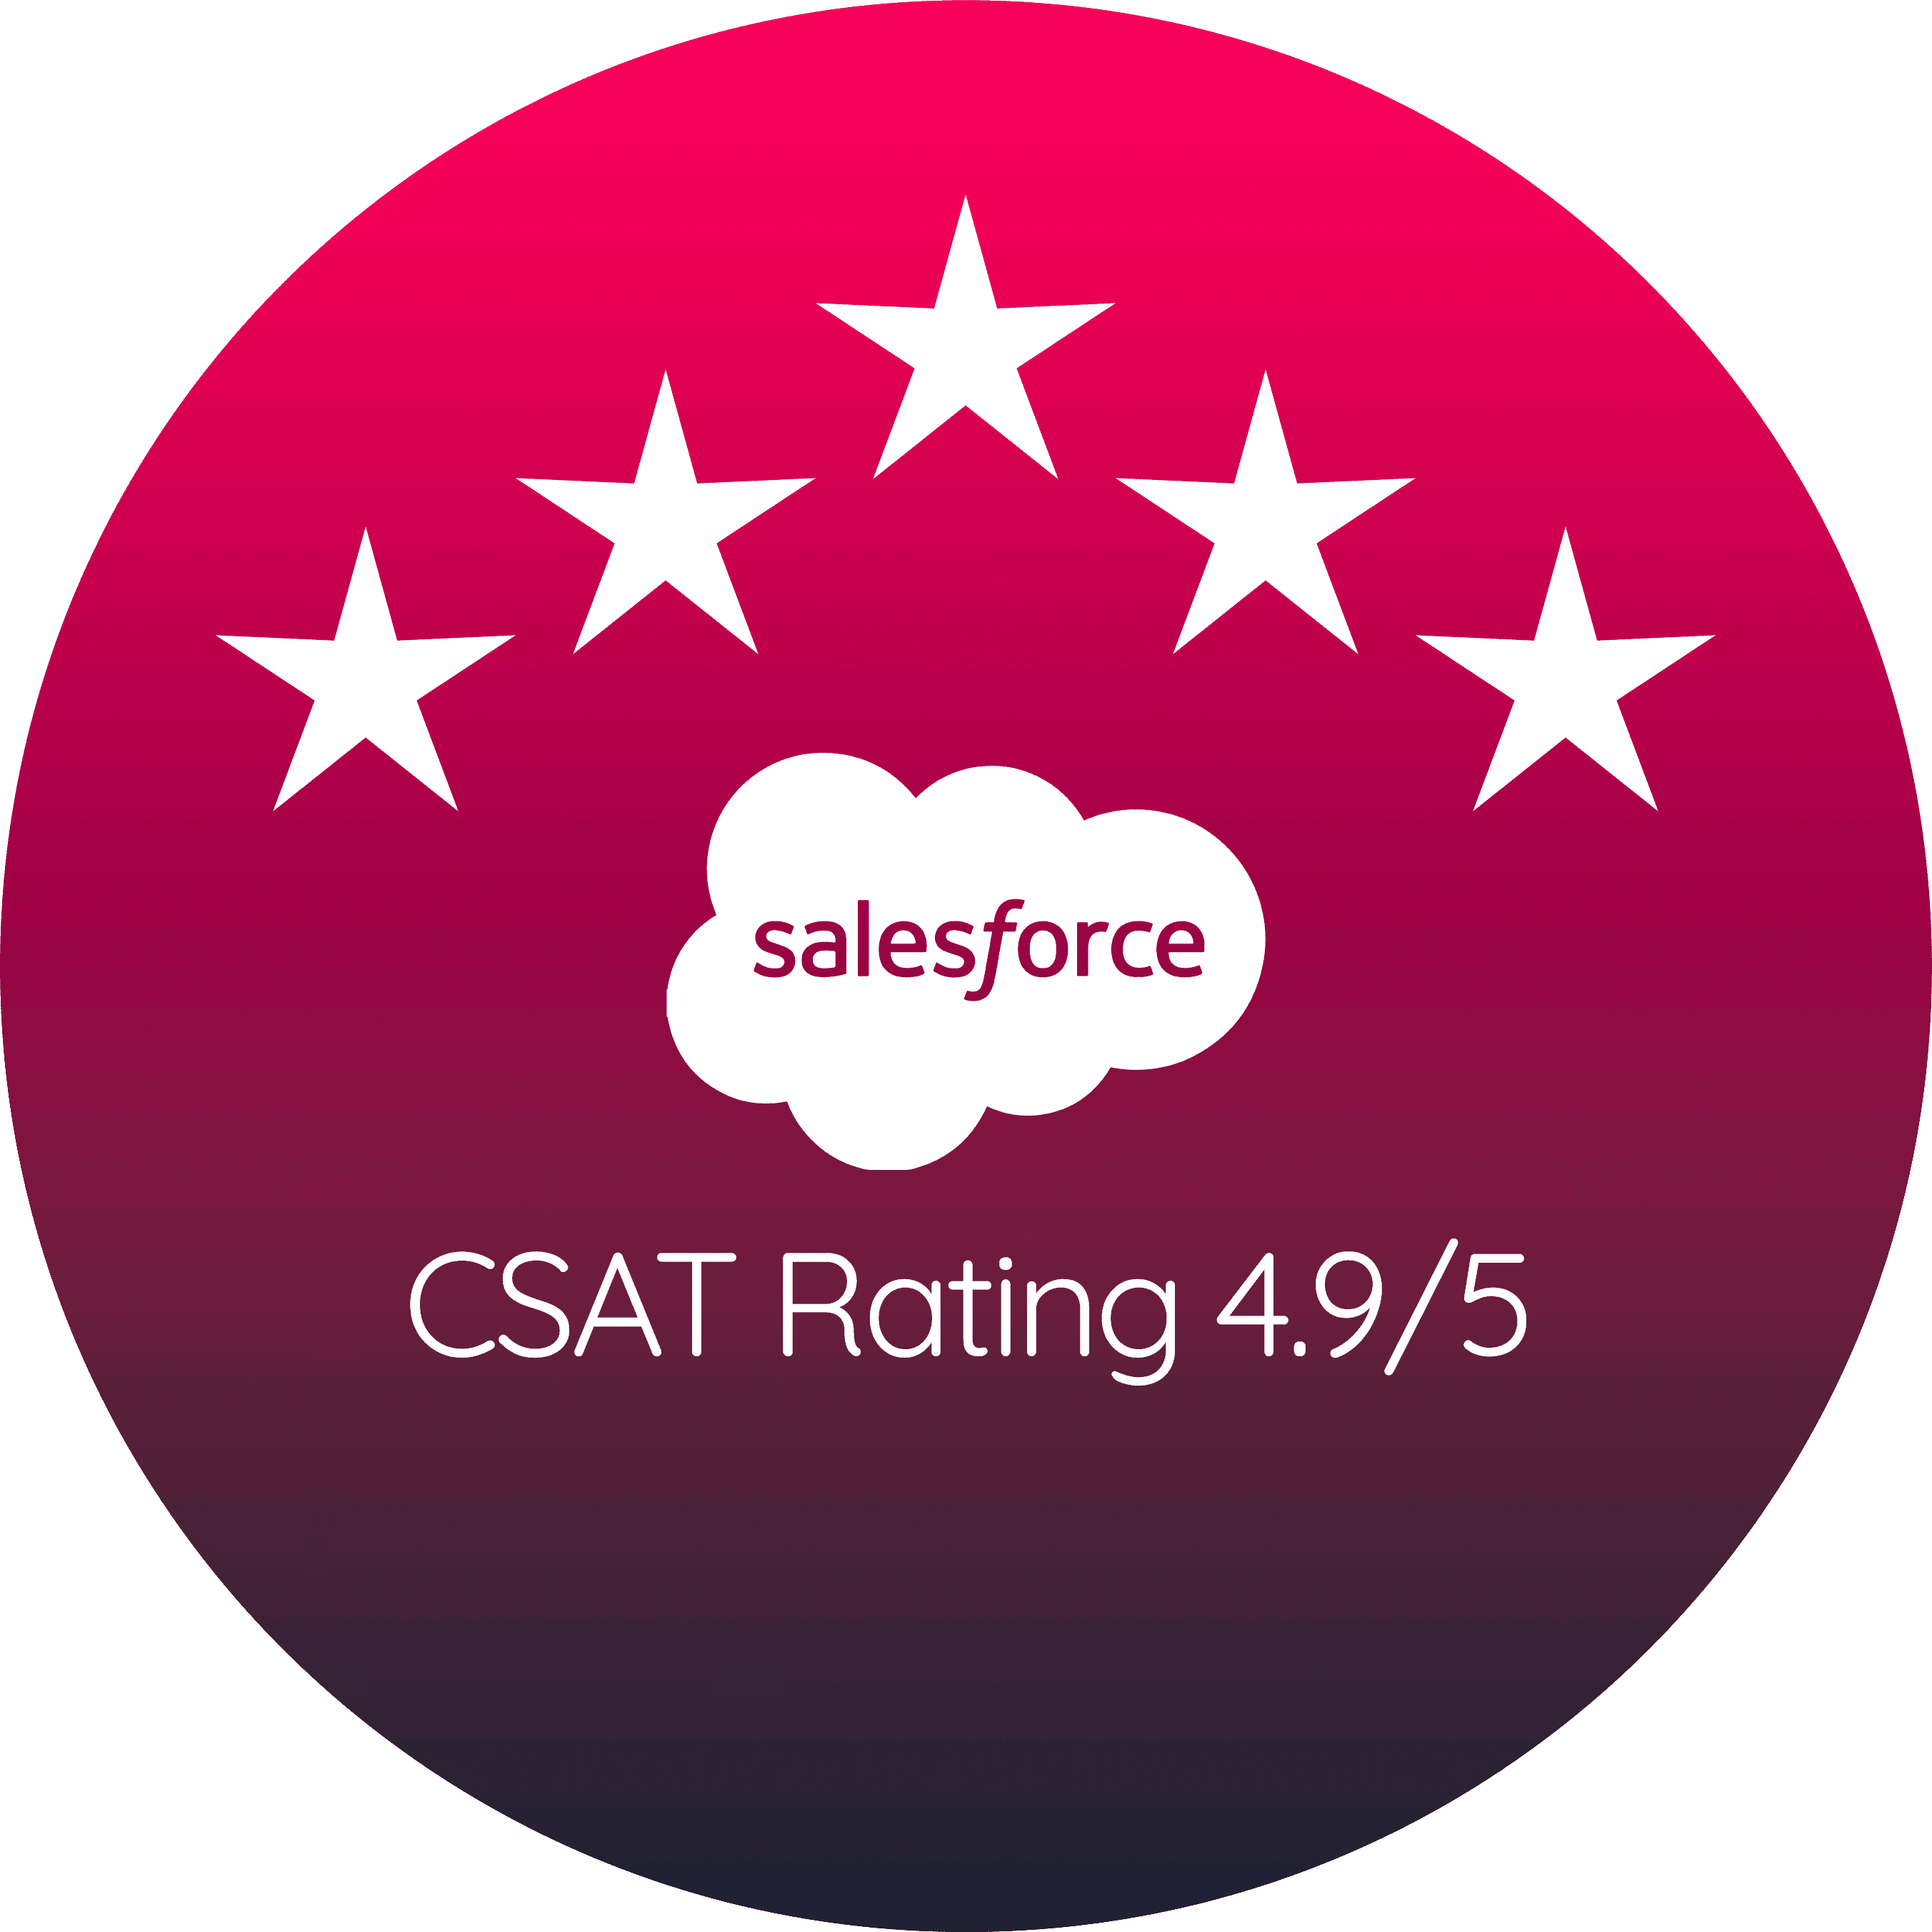 Salesforce CSAT rating for financial management software.